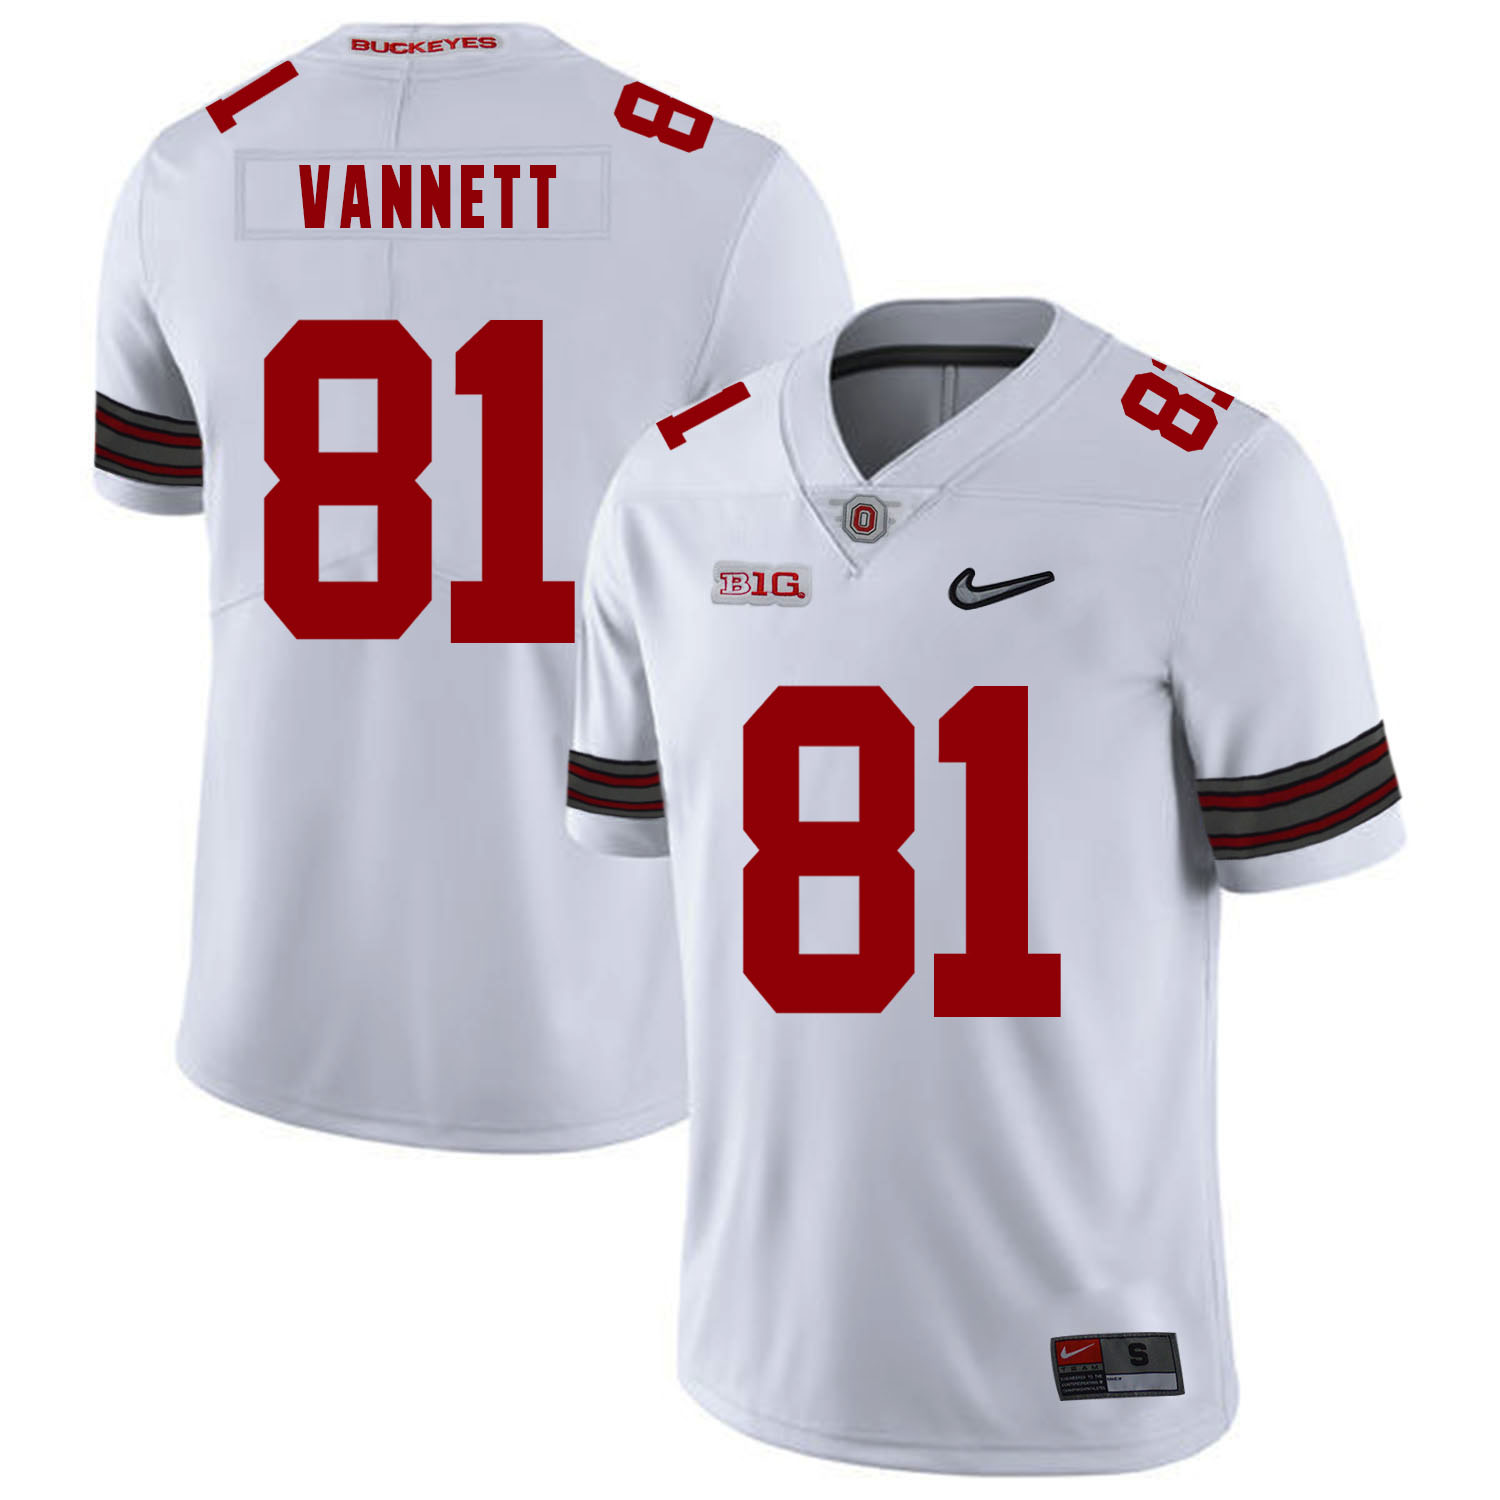 Ohio State Buckeyes 81 Nick Vannett White Diamond Nike Logo College Football Jersey